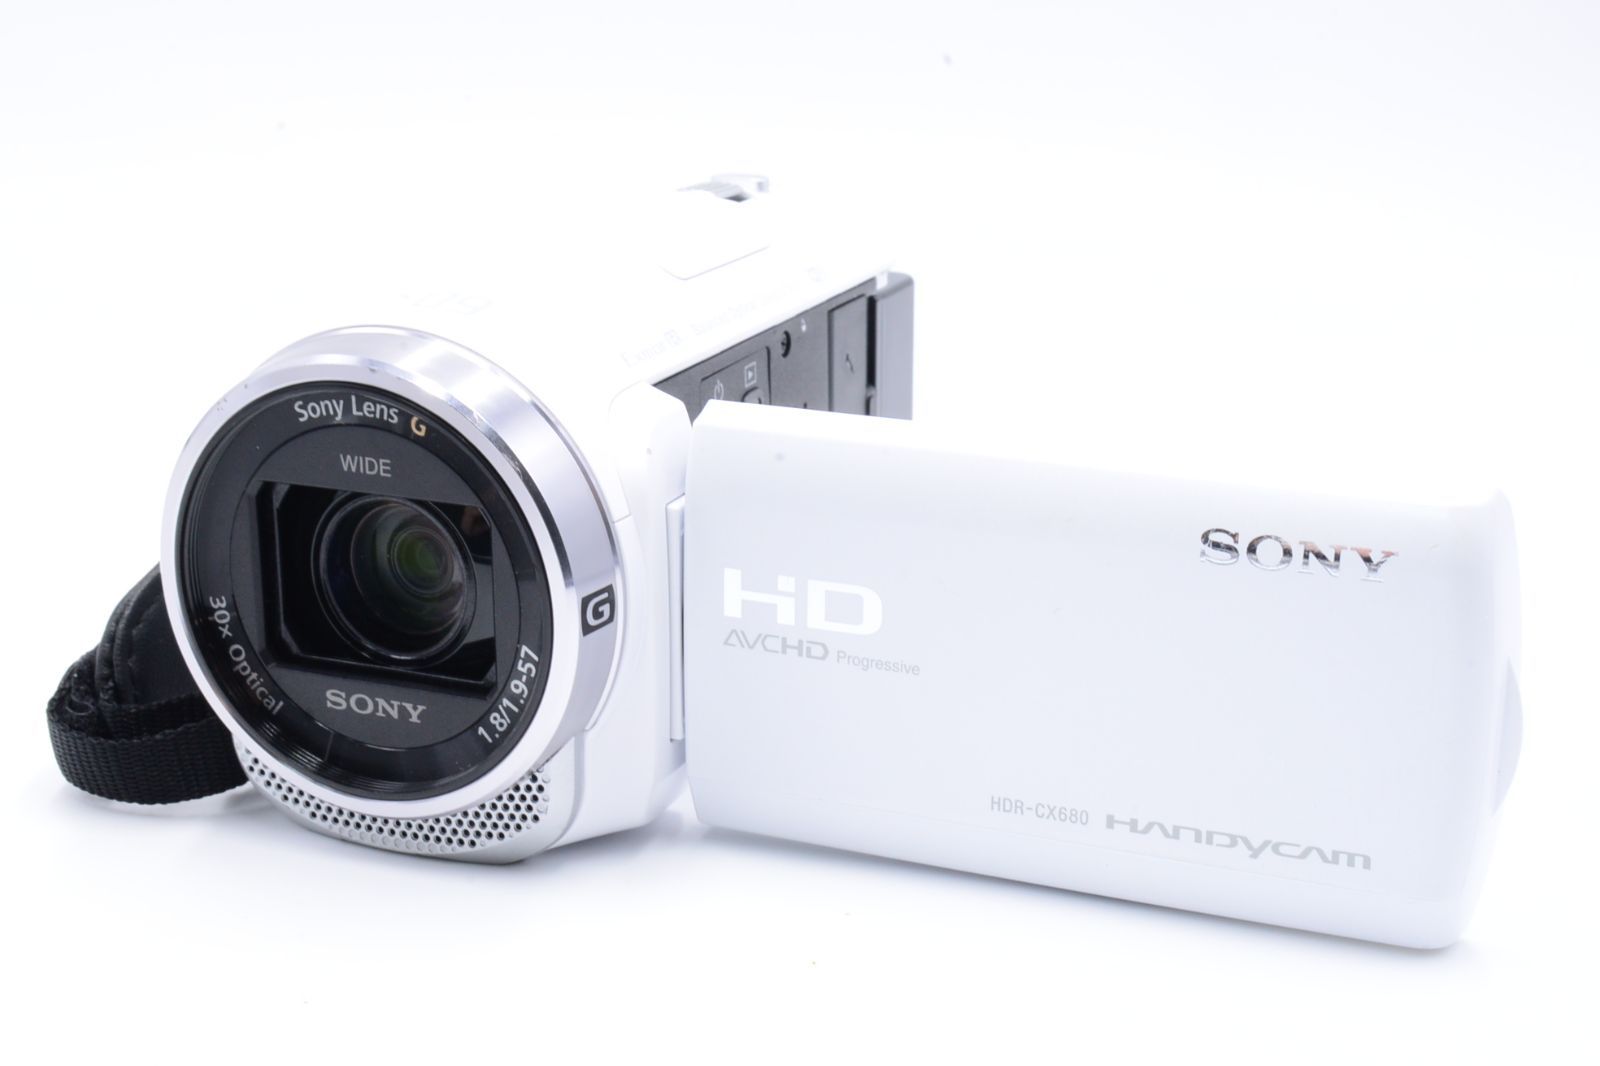 SONY デジタルHDビデオカメラ 64GB HDR-CX680-W ホワイト